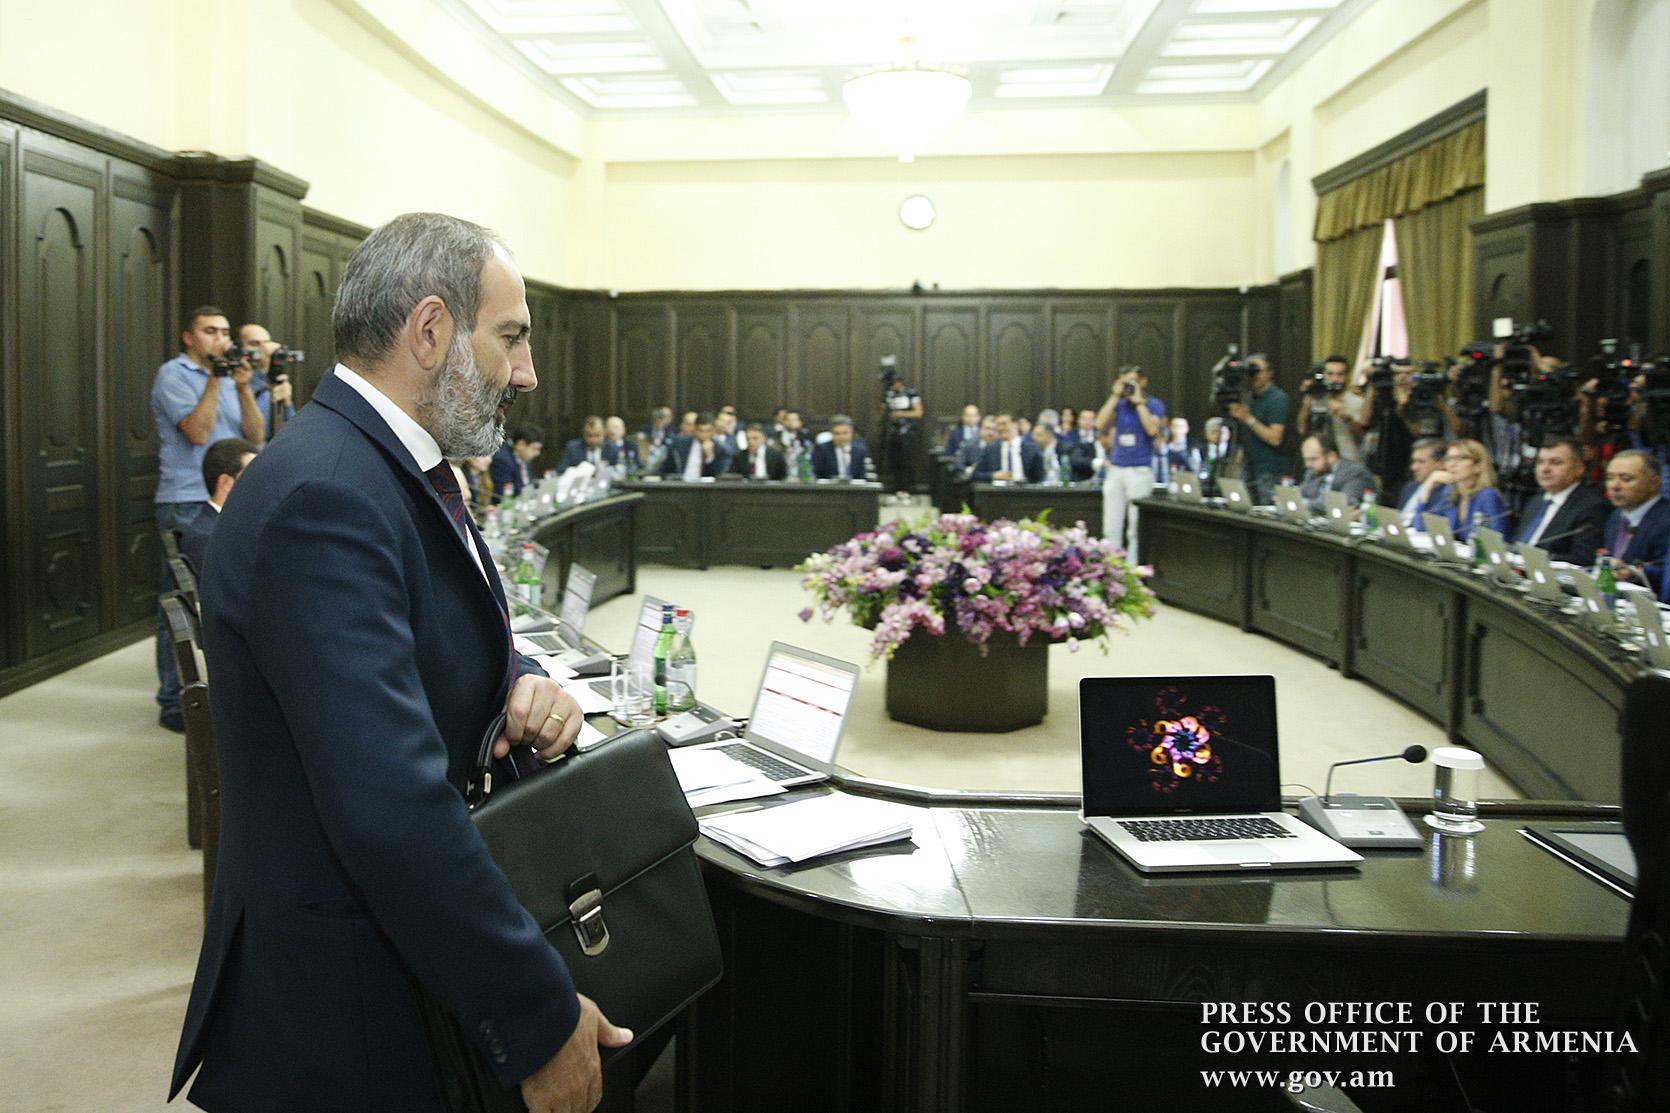 Armenia Ready but Will Not Start a War: Prime Minister Pashinyan